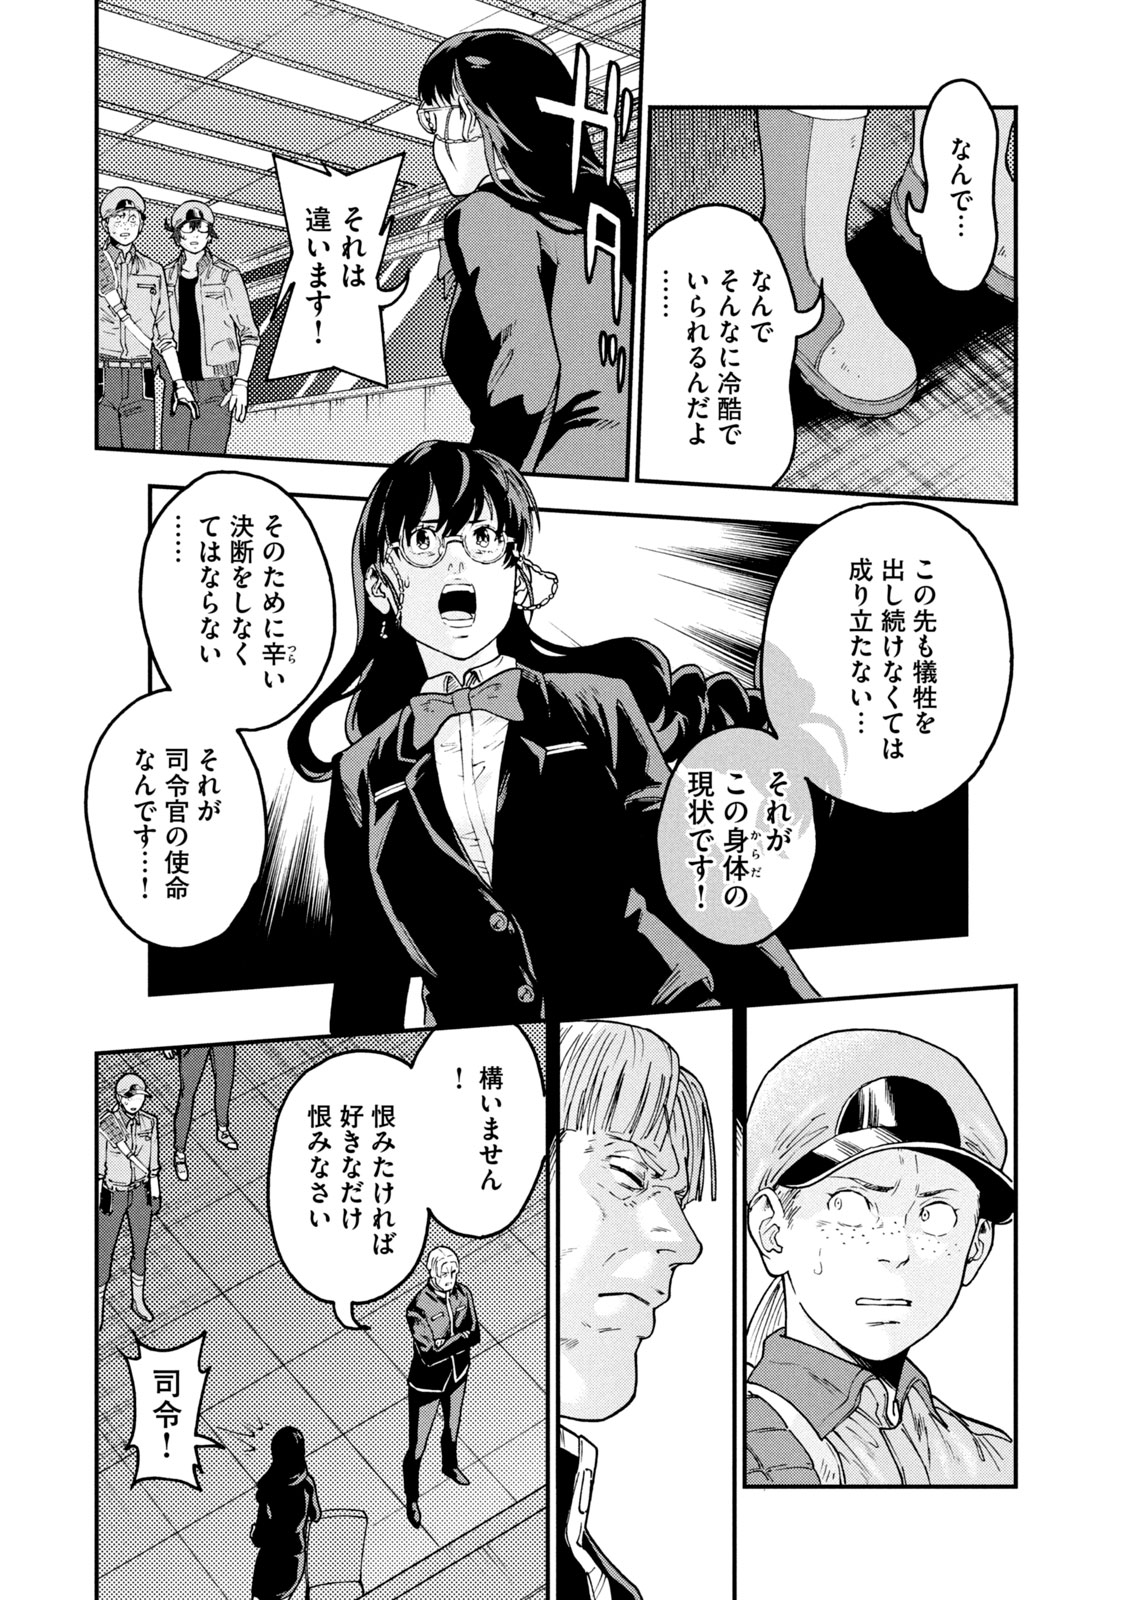 Hataraku Saibou BLACK - Chapter 34 - Page 23